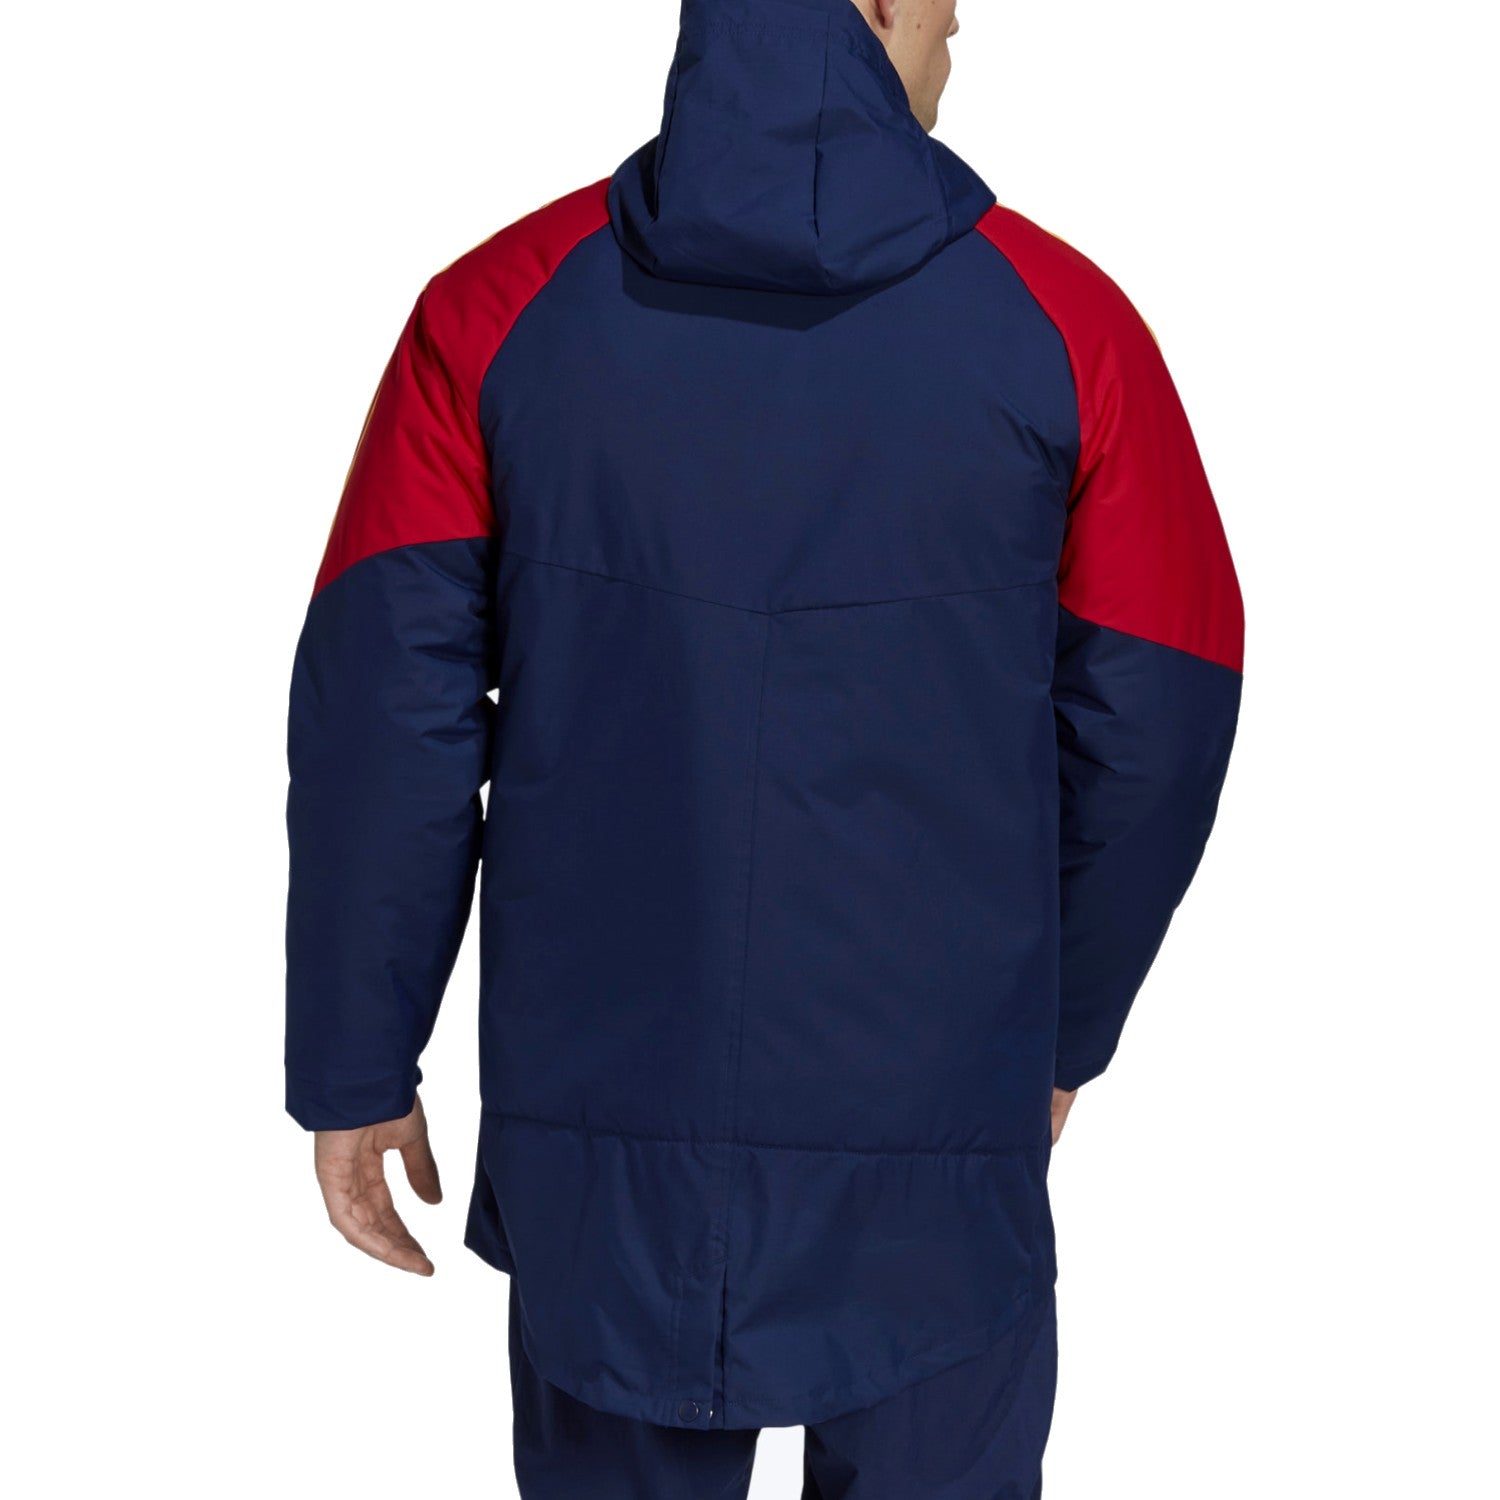 Nike Team USA Parka Soccer-football Jacket Winter Coat Large Blue